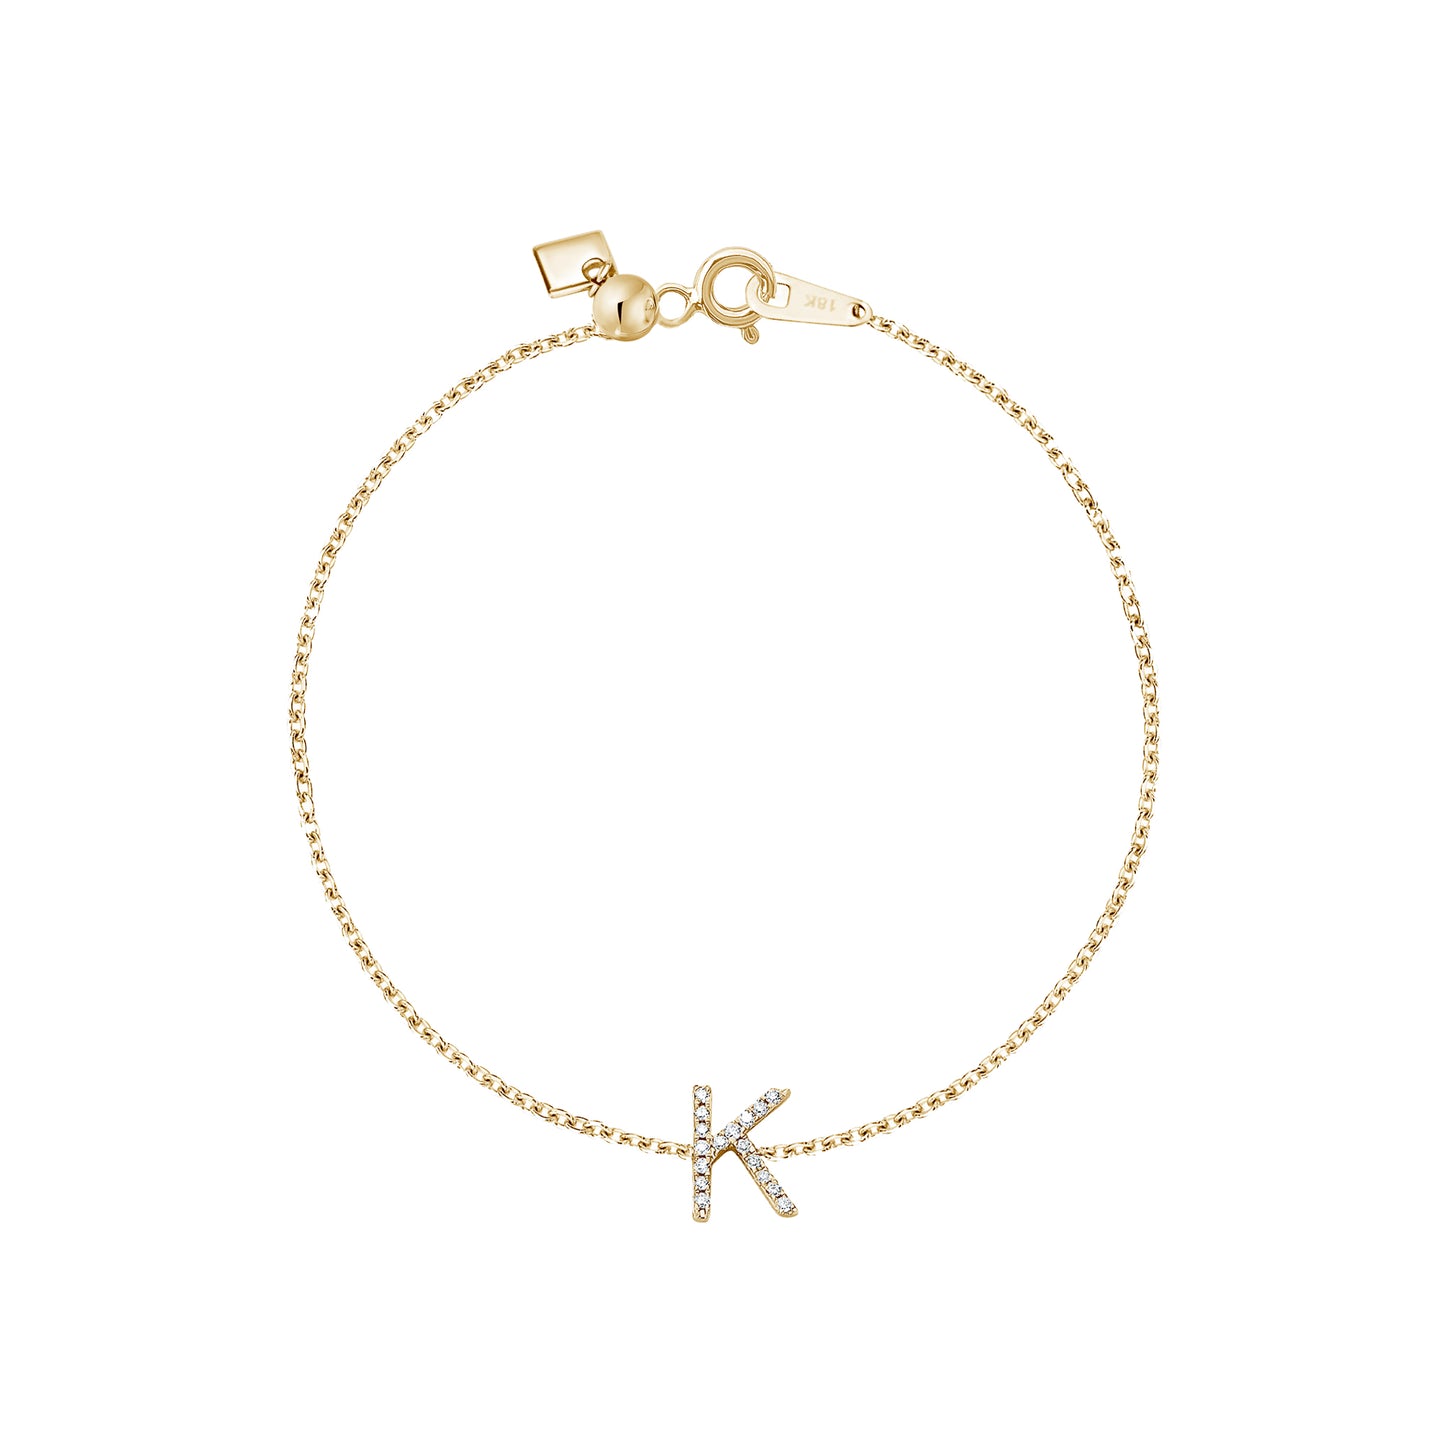 Louis Vuitton 18k White Gold Monogram Bracelet w/Box. Get the